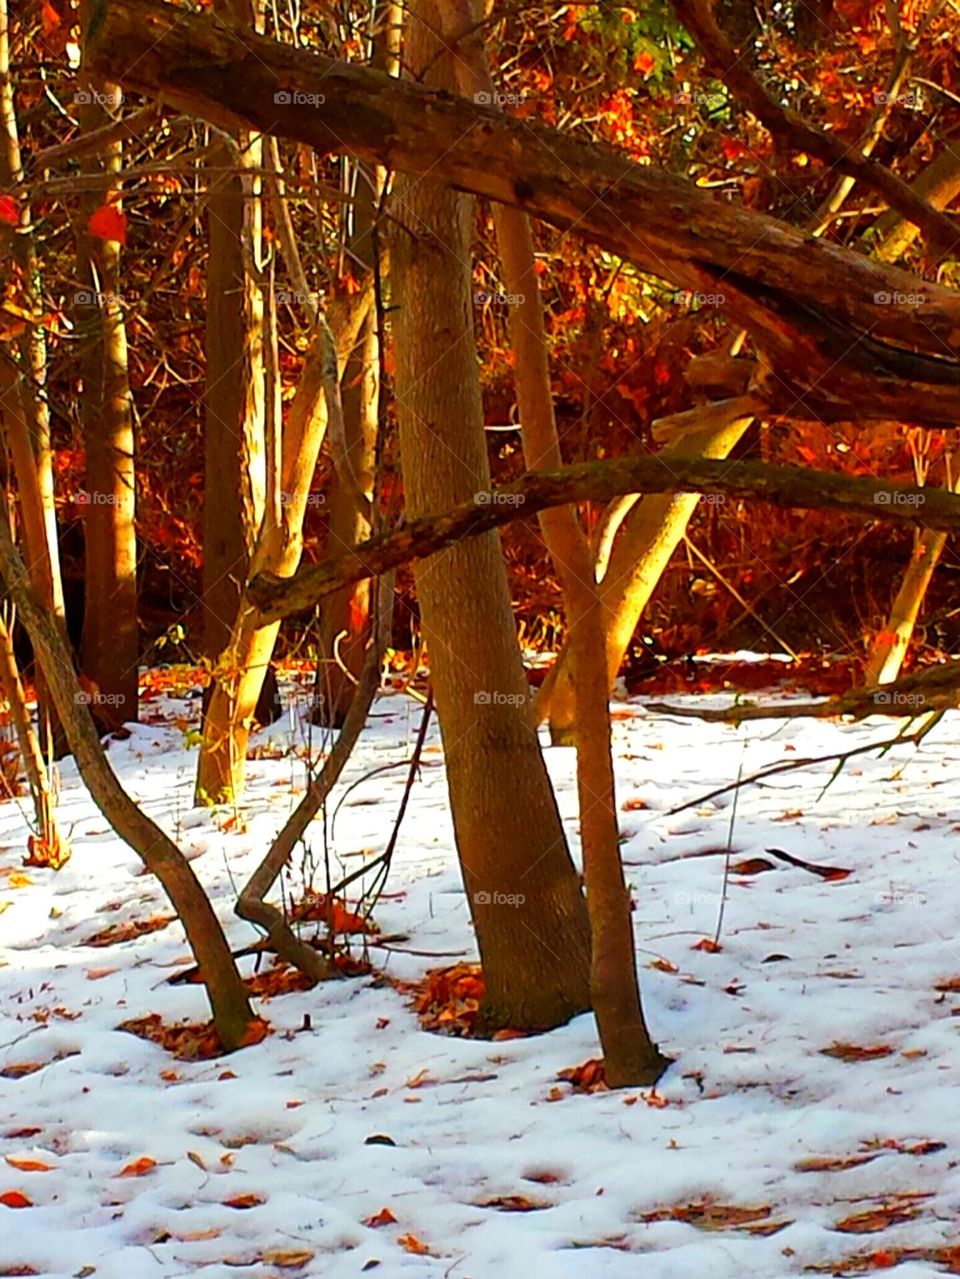 "Winter Trees"